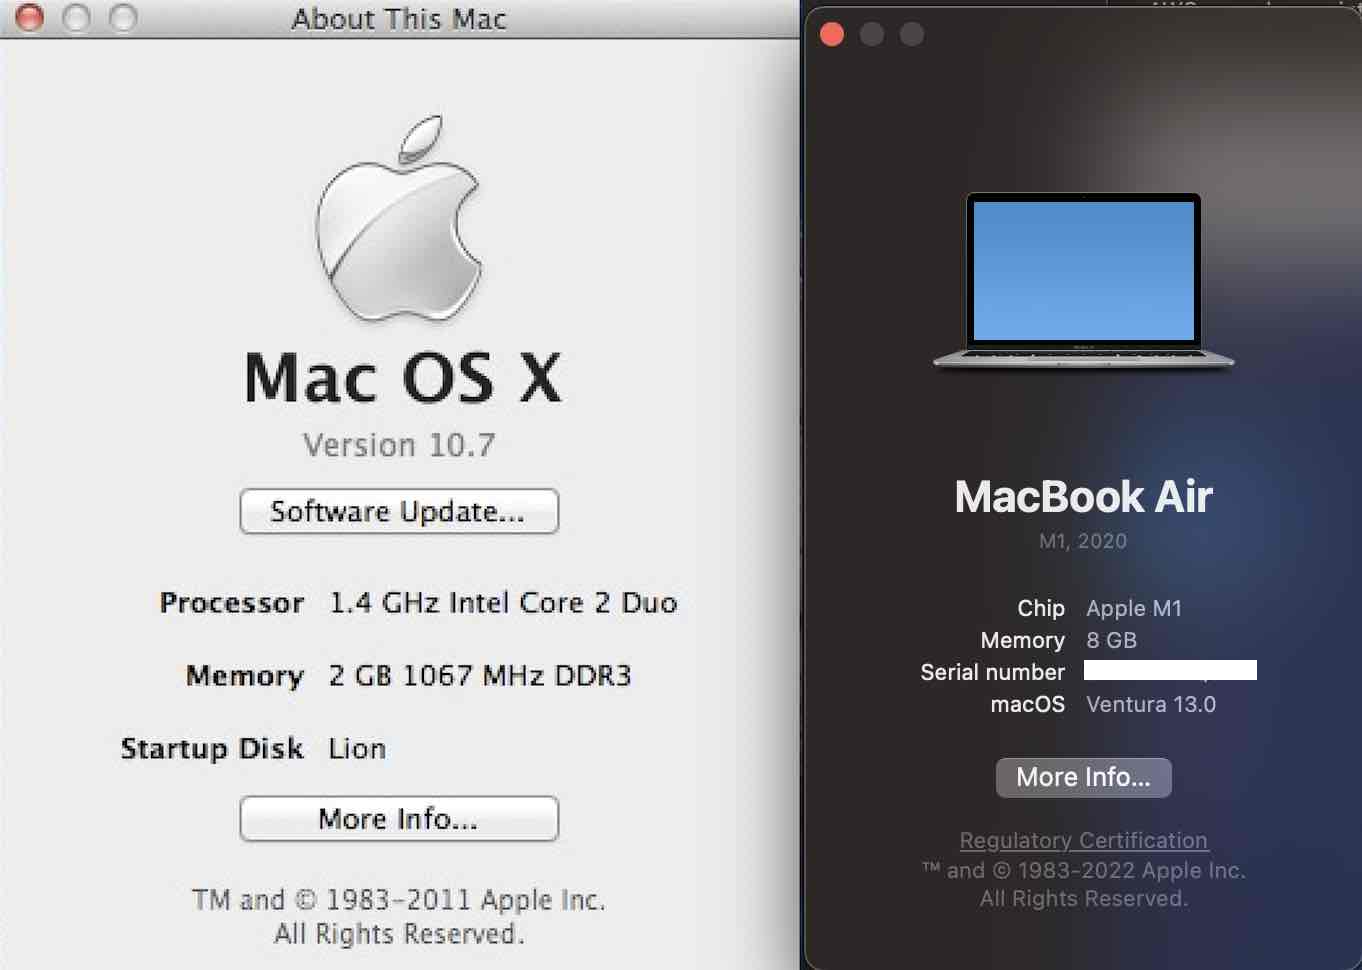 About this Mac - macOS Vs Mac OS X